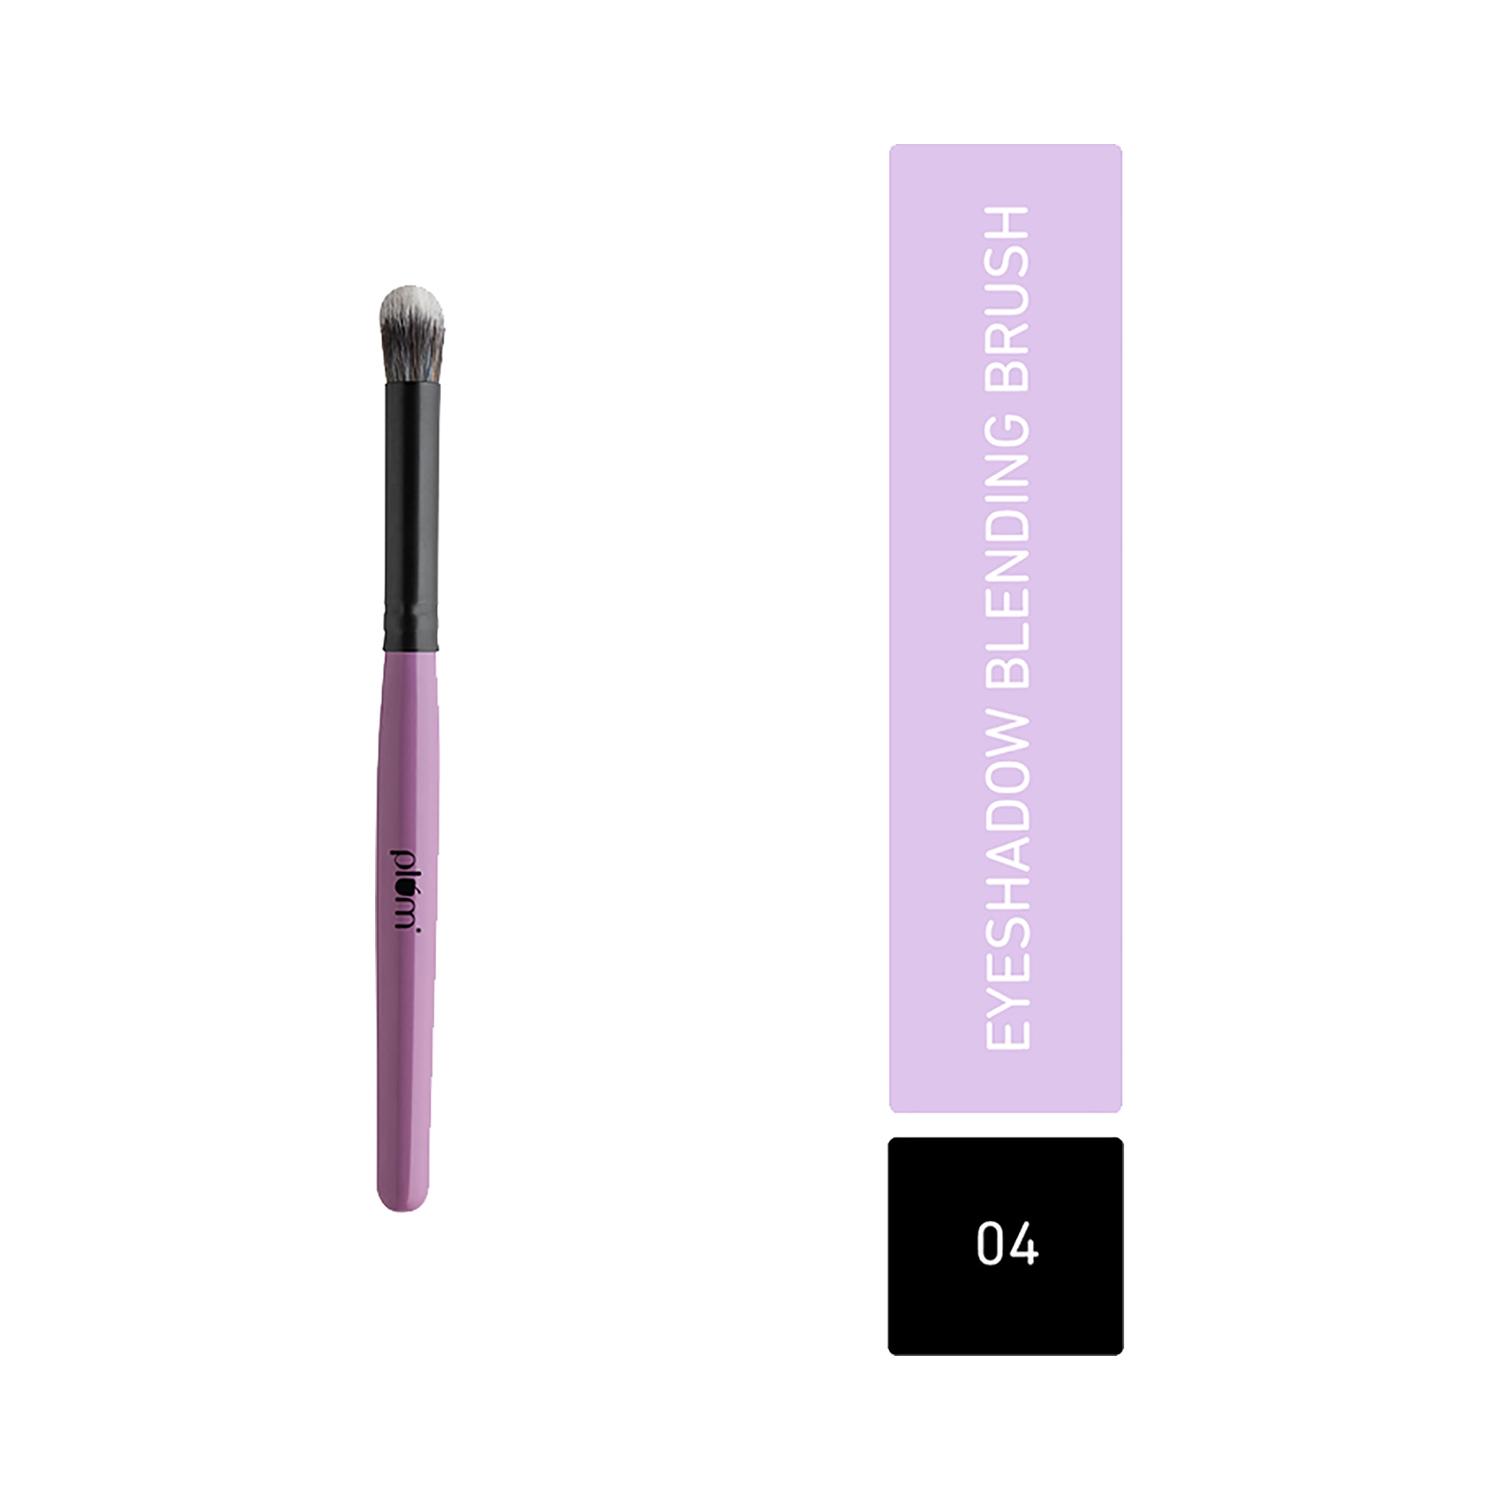 plum soft blend eyeshadow blending brush - 04 purple & black